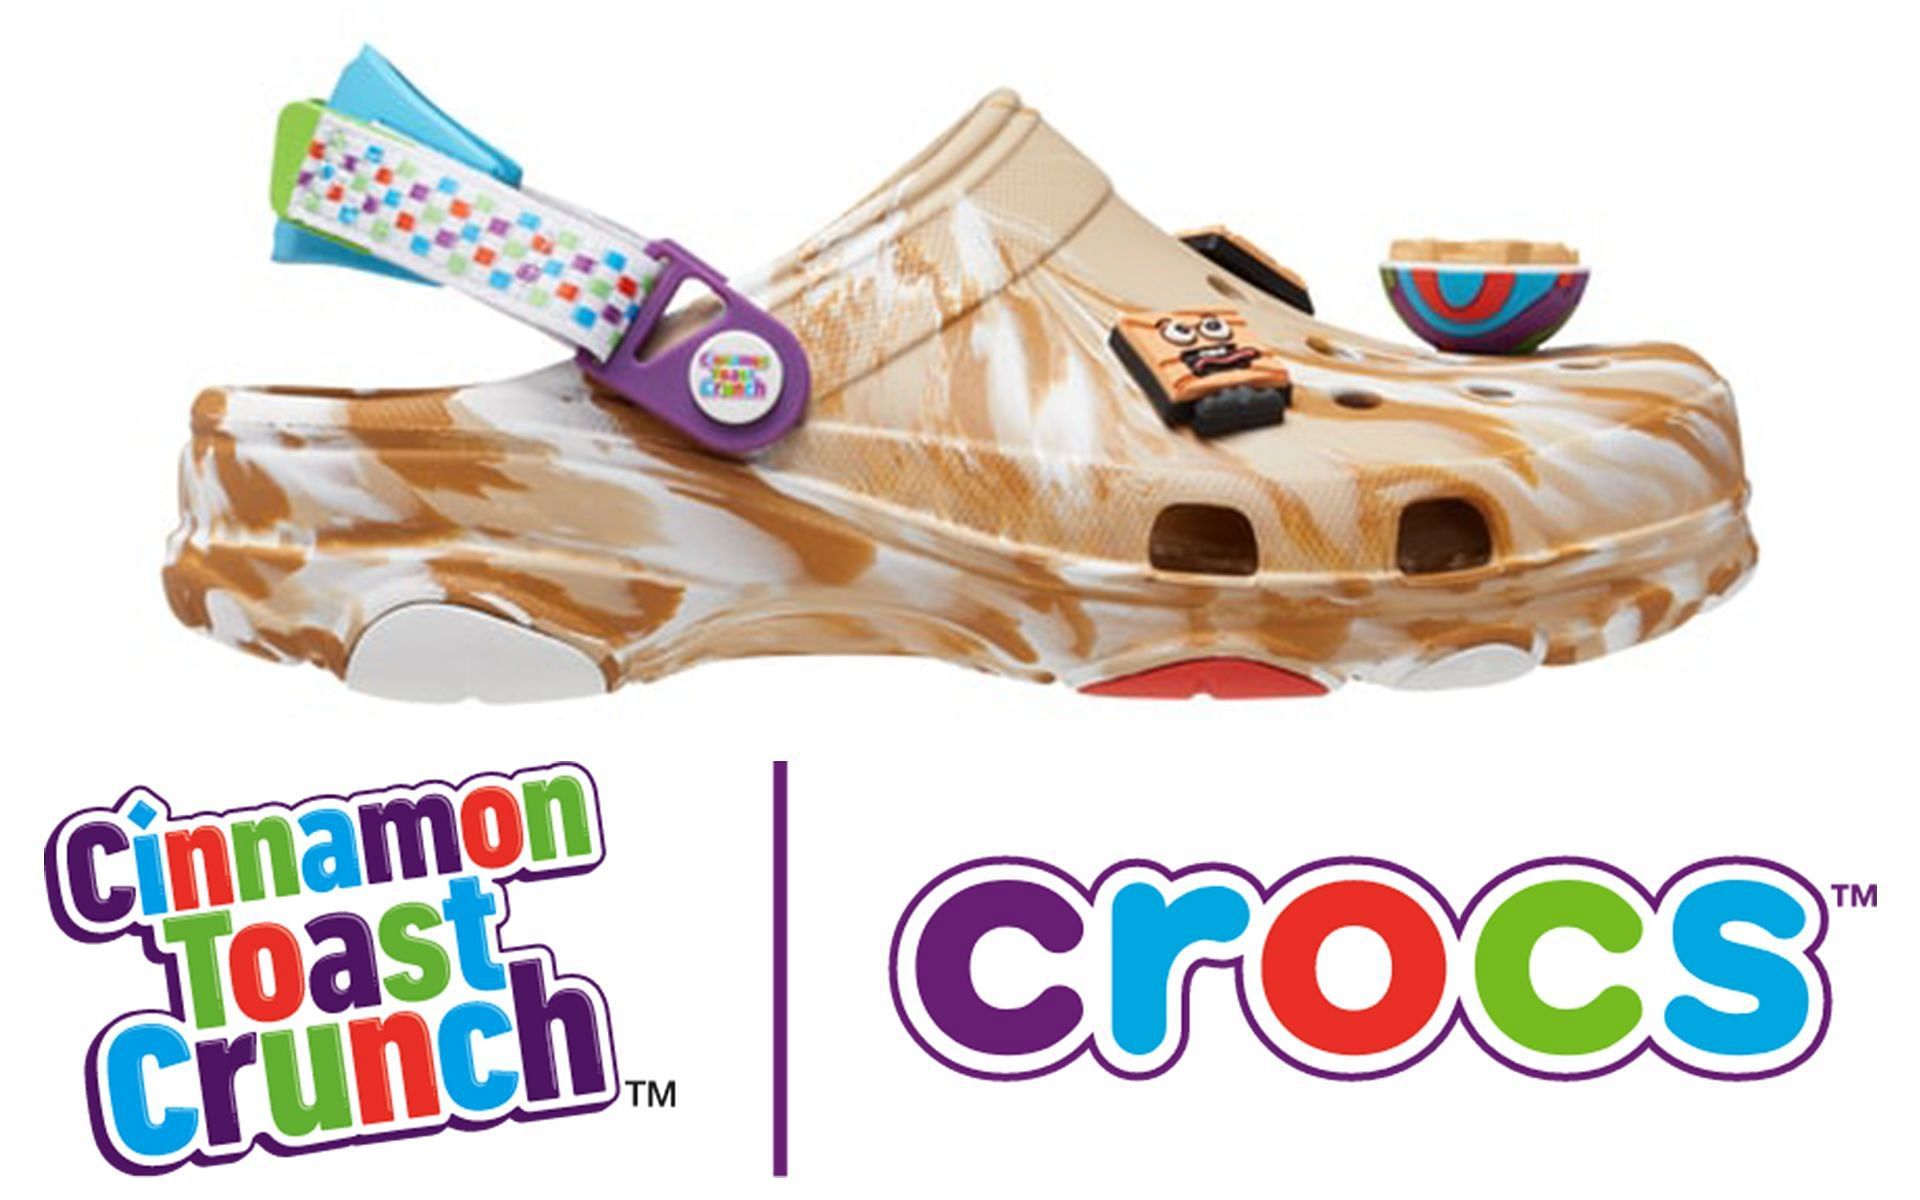 Crocs X General Mills cereal collab (Image via Crocs/ Footlocker)